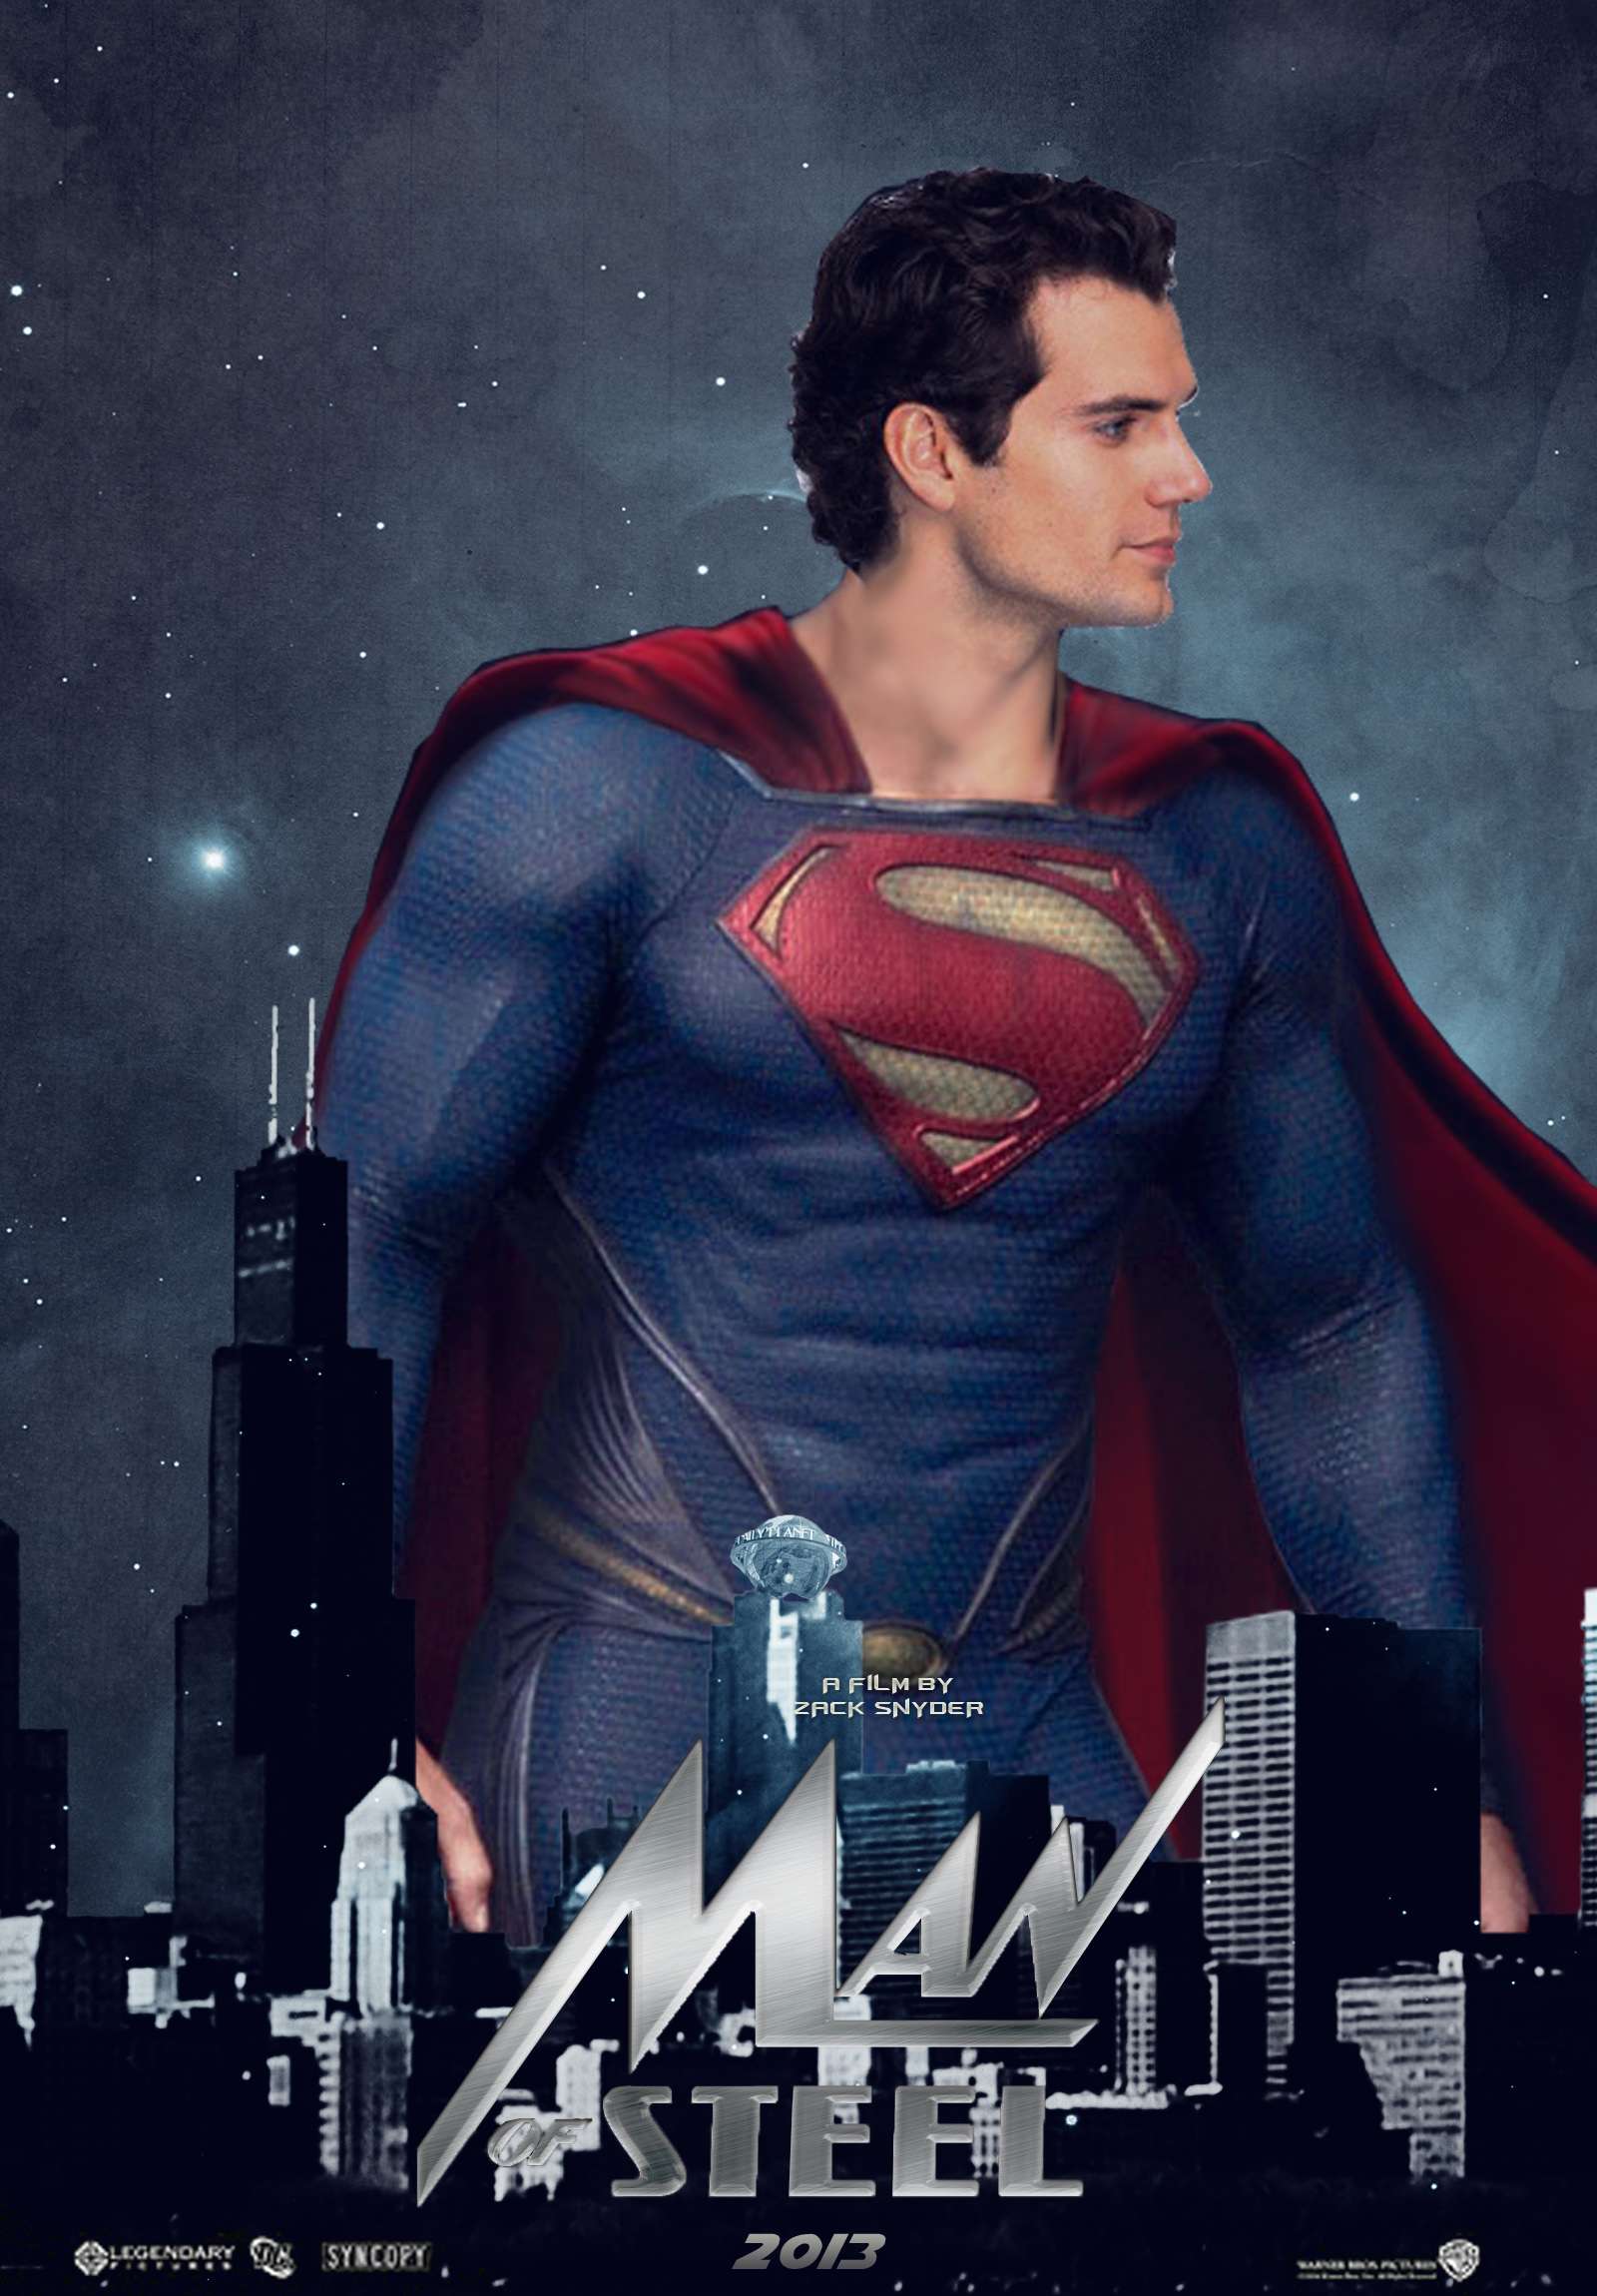 Re The Official Superman Fan Art Manips Thread Part 7